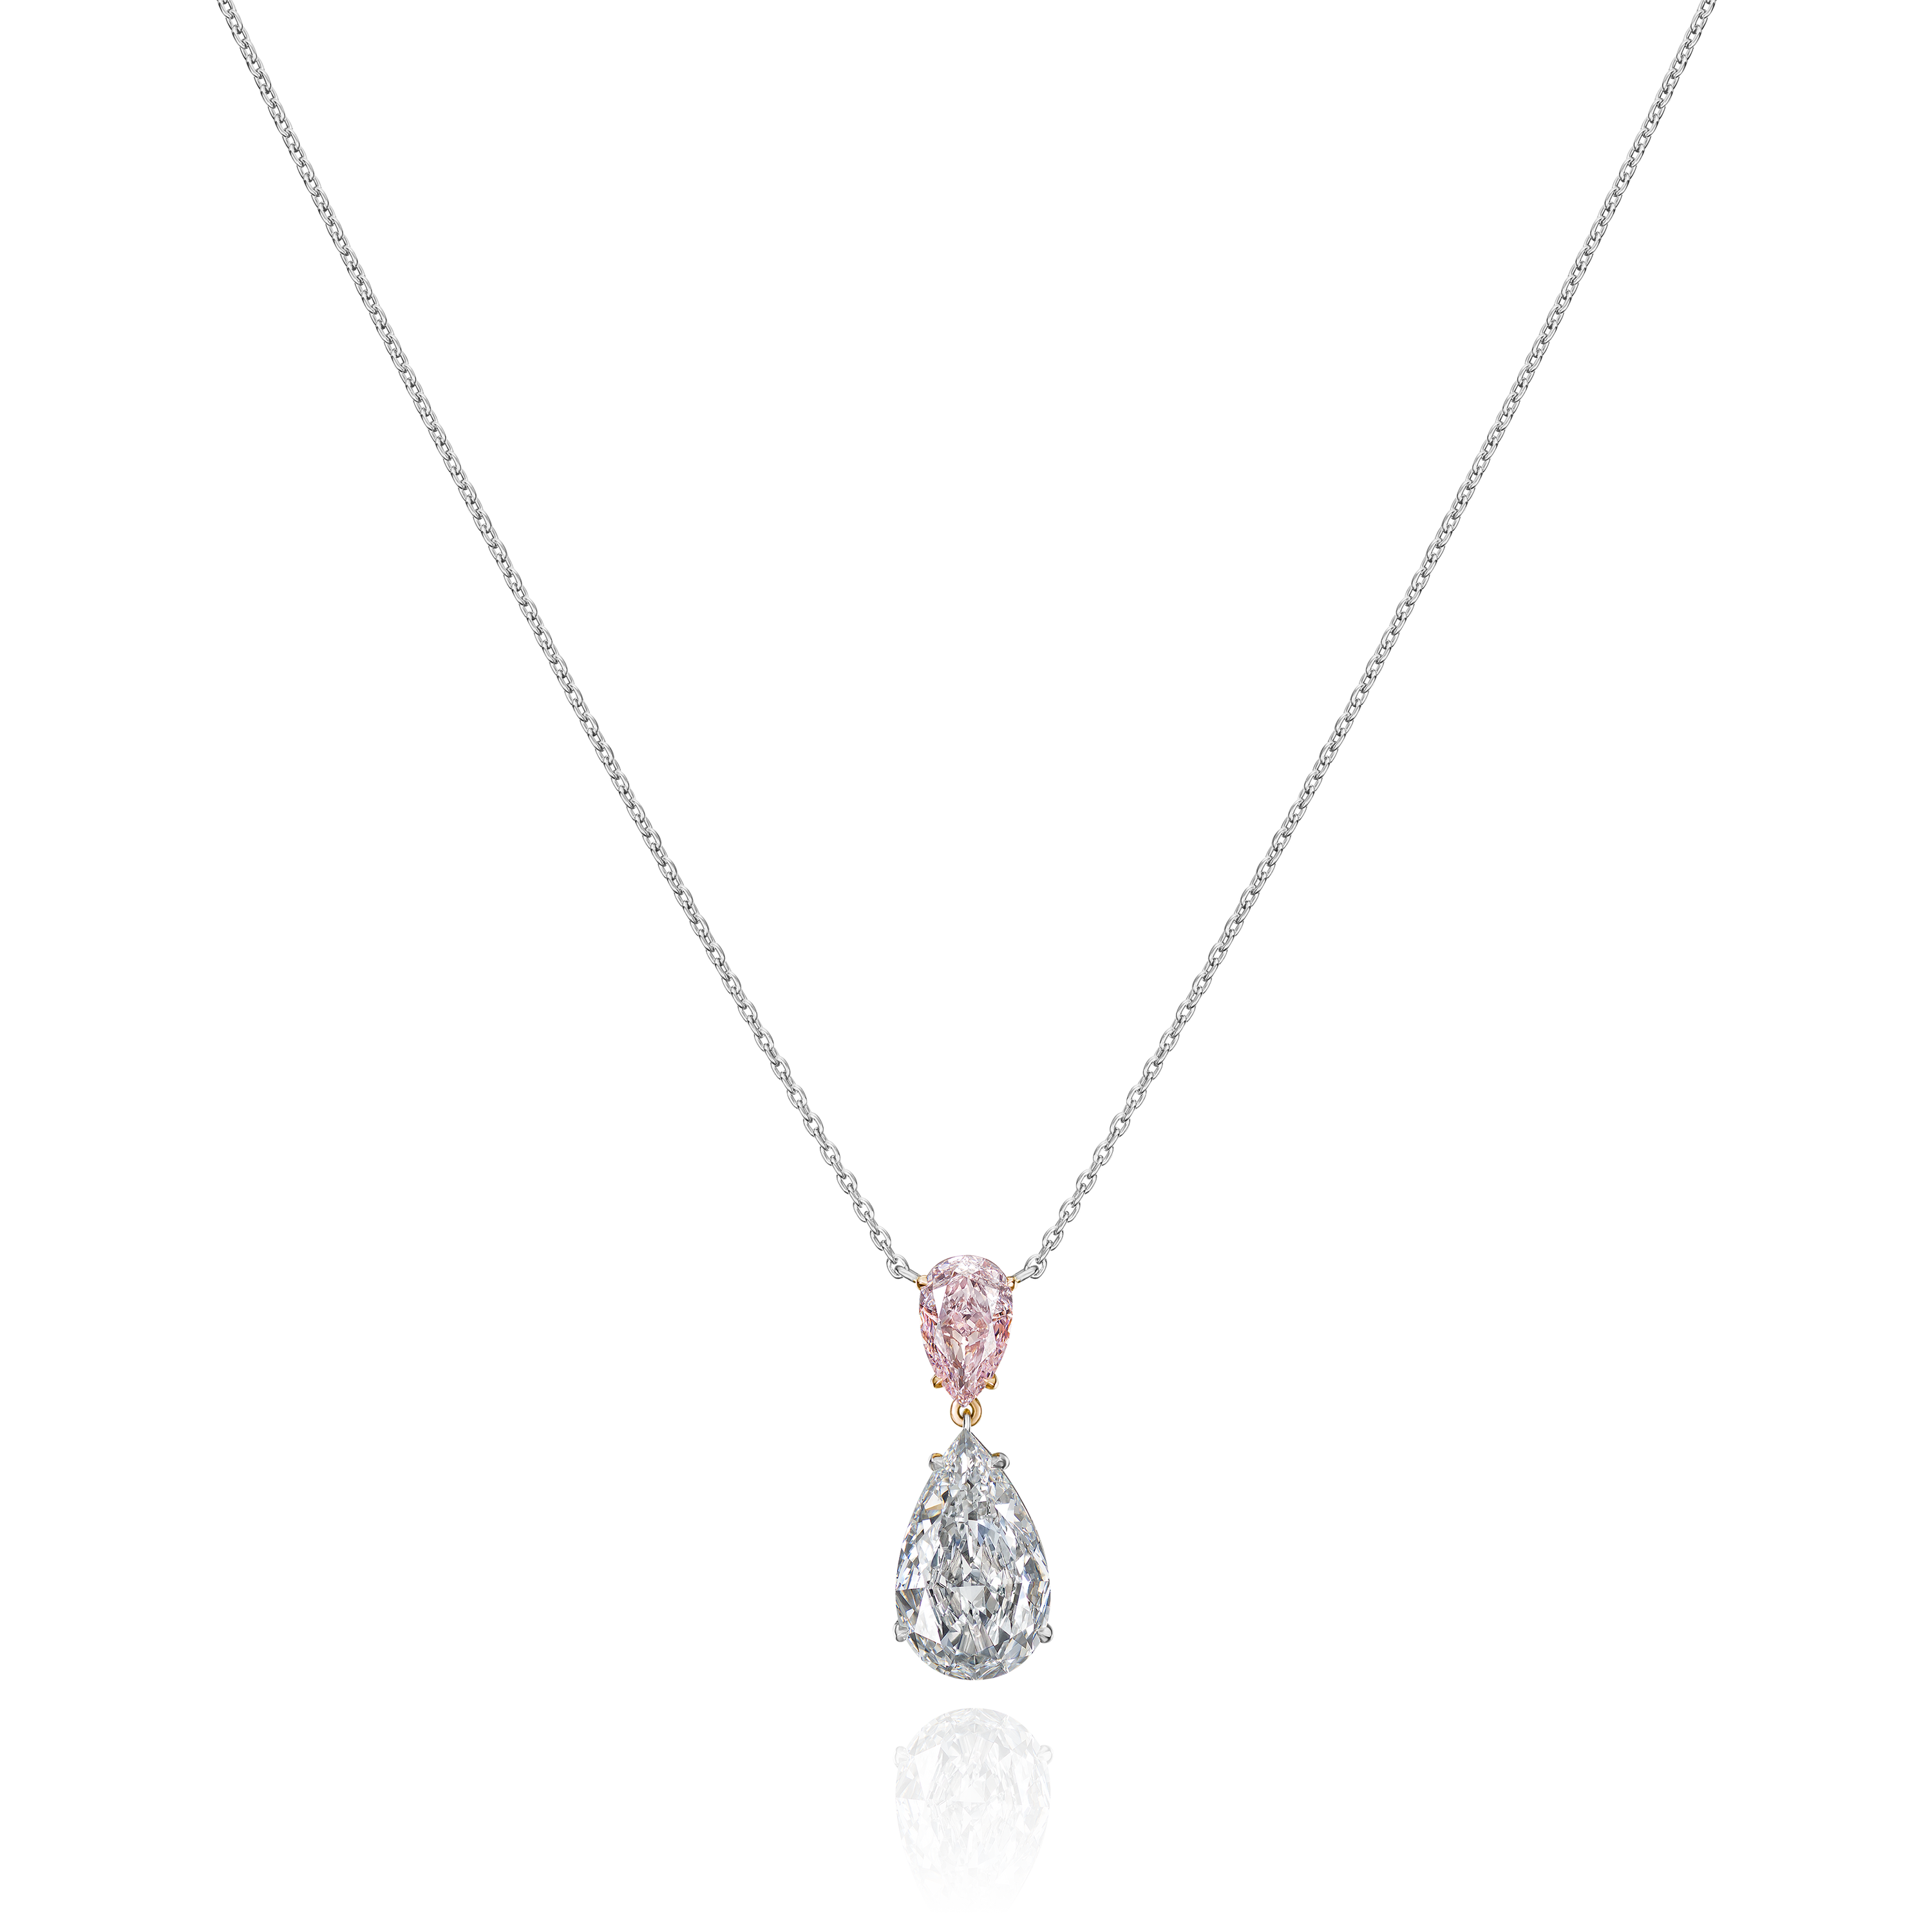 3.18 carat Pear Shape & Pink Diamond Pendant Necklace — Shreve, Crump & Low